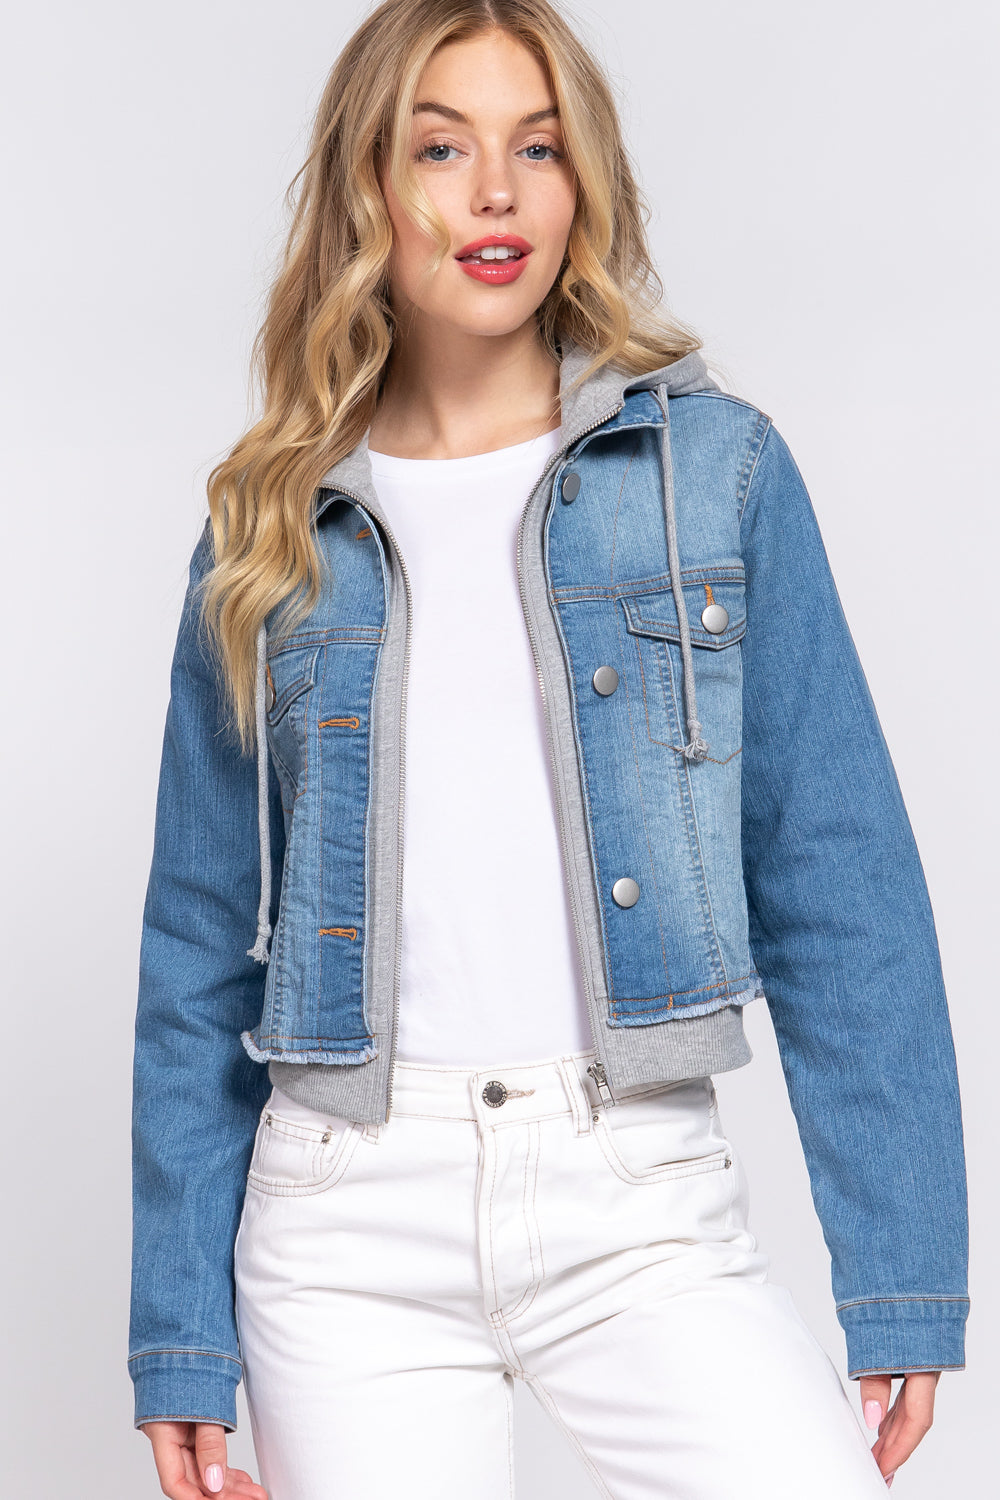 Lavnis Men's Denim Hoodie Jacket Casual Slim Fit Button Down Jeans Coat  Dark Blue XL : Buy Online at Best Price in KSA - Souq is now Amazon.sa:  Fashion